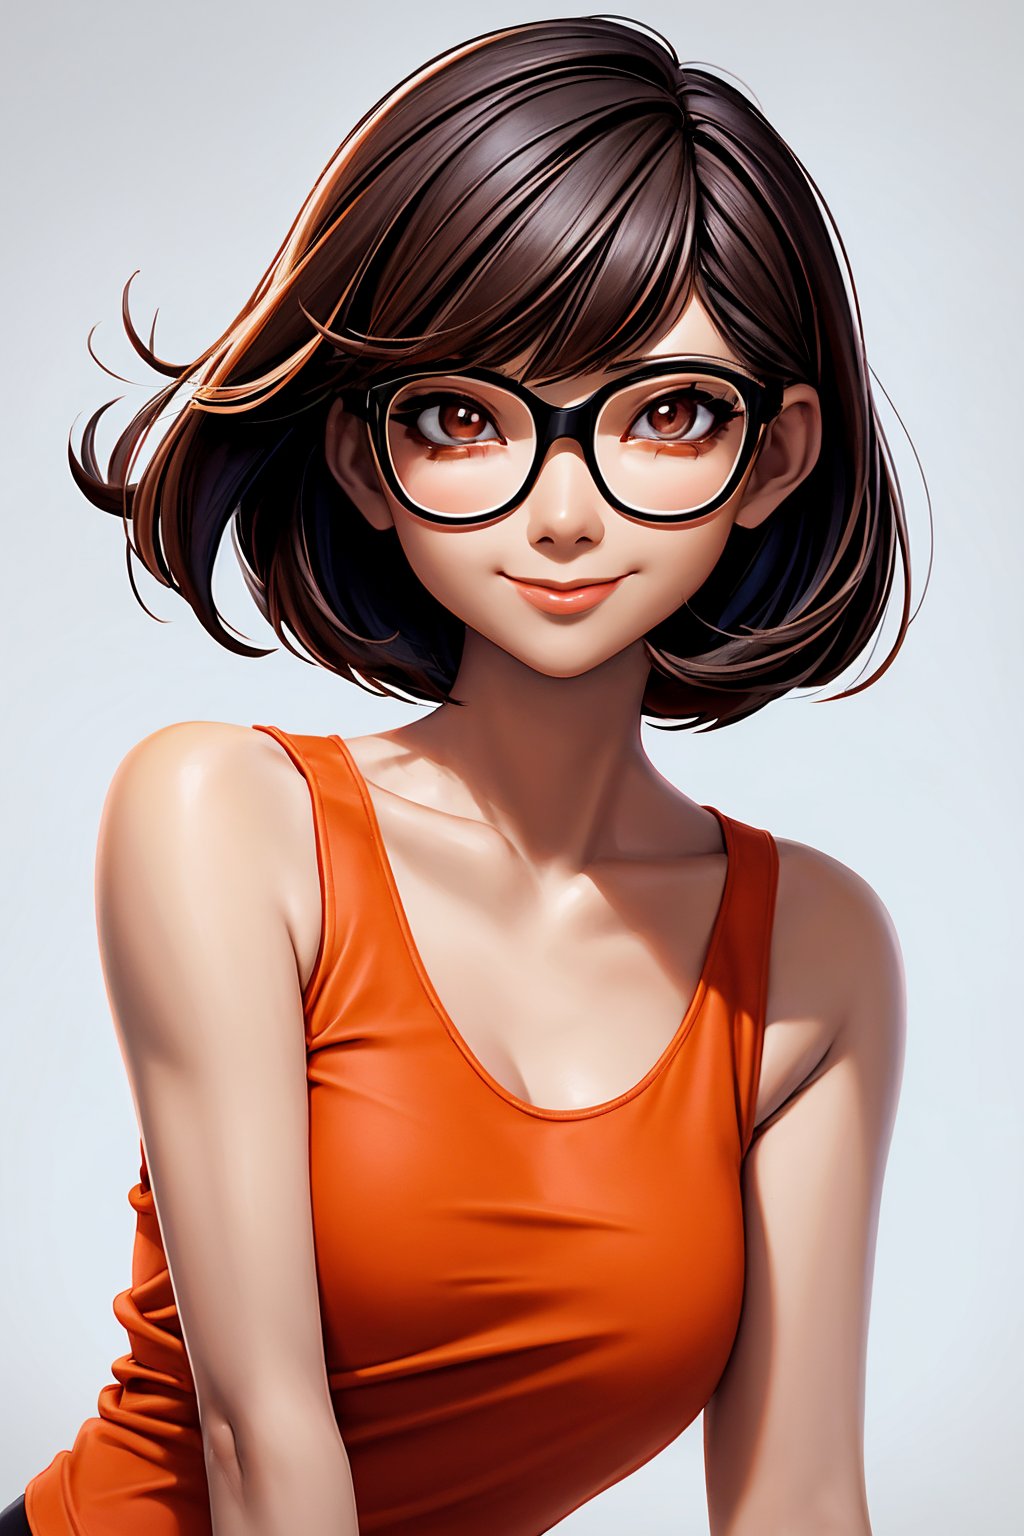 asian woman, bob haircut, brown hair, red glasses, light smile, collarbone, (orange tank top), medium shot, shiny skin, (white background)